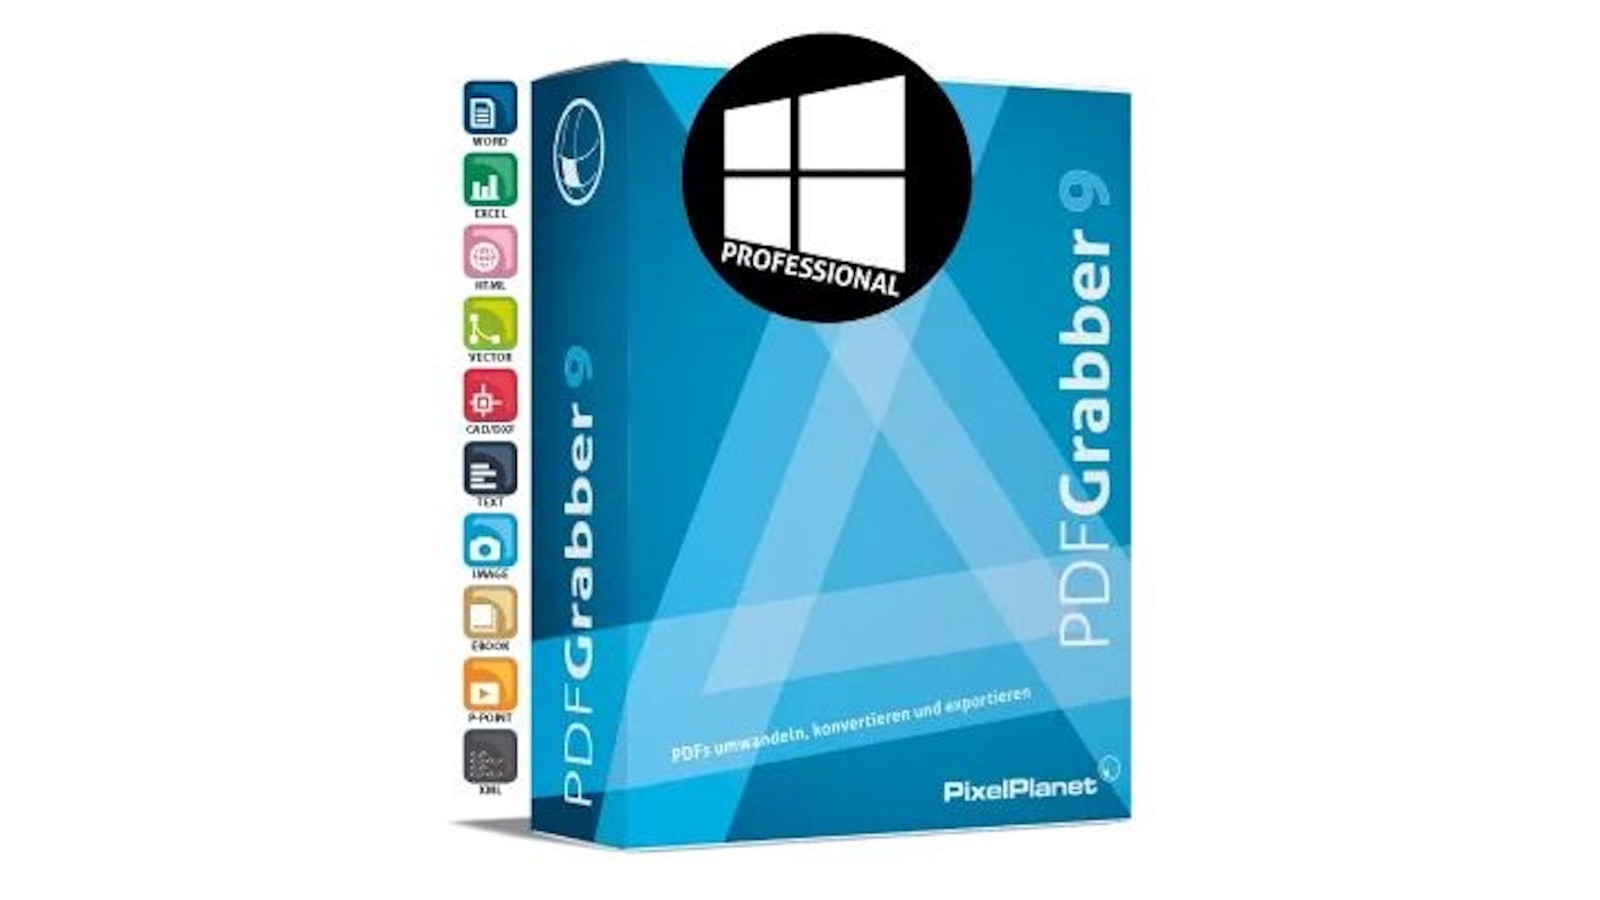 PixelPlanet PdfGrabber 9 Professional Network Licence Key (Lifetime / 5 Users), 7.74$